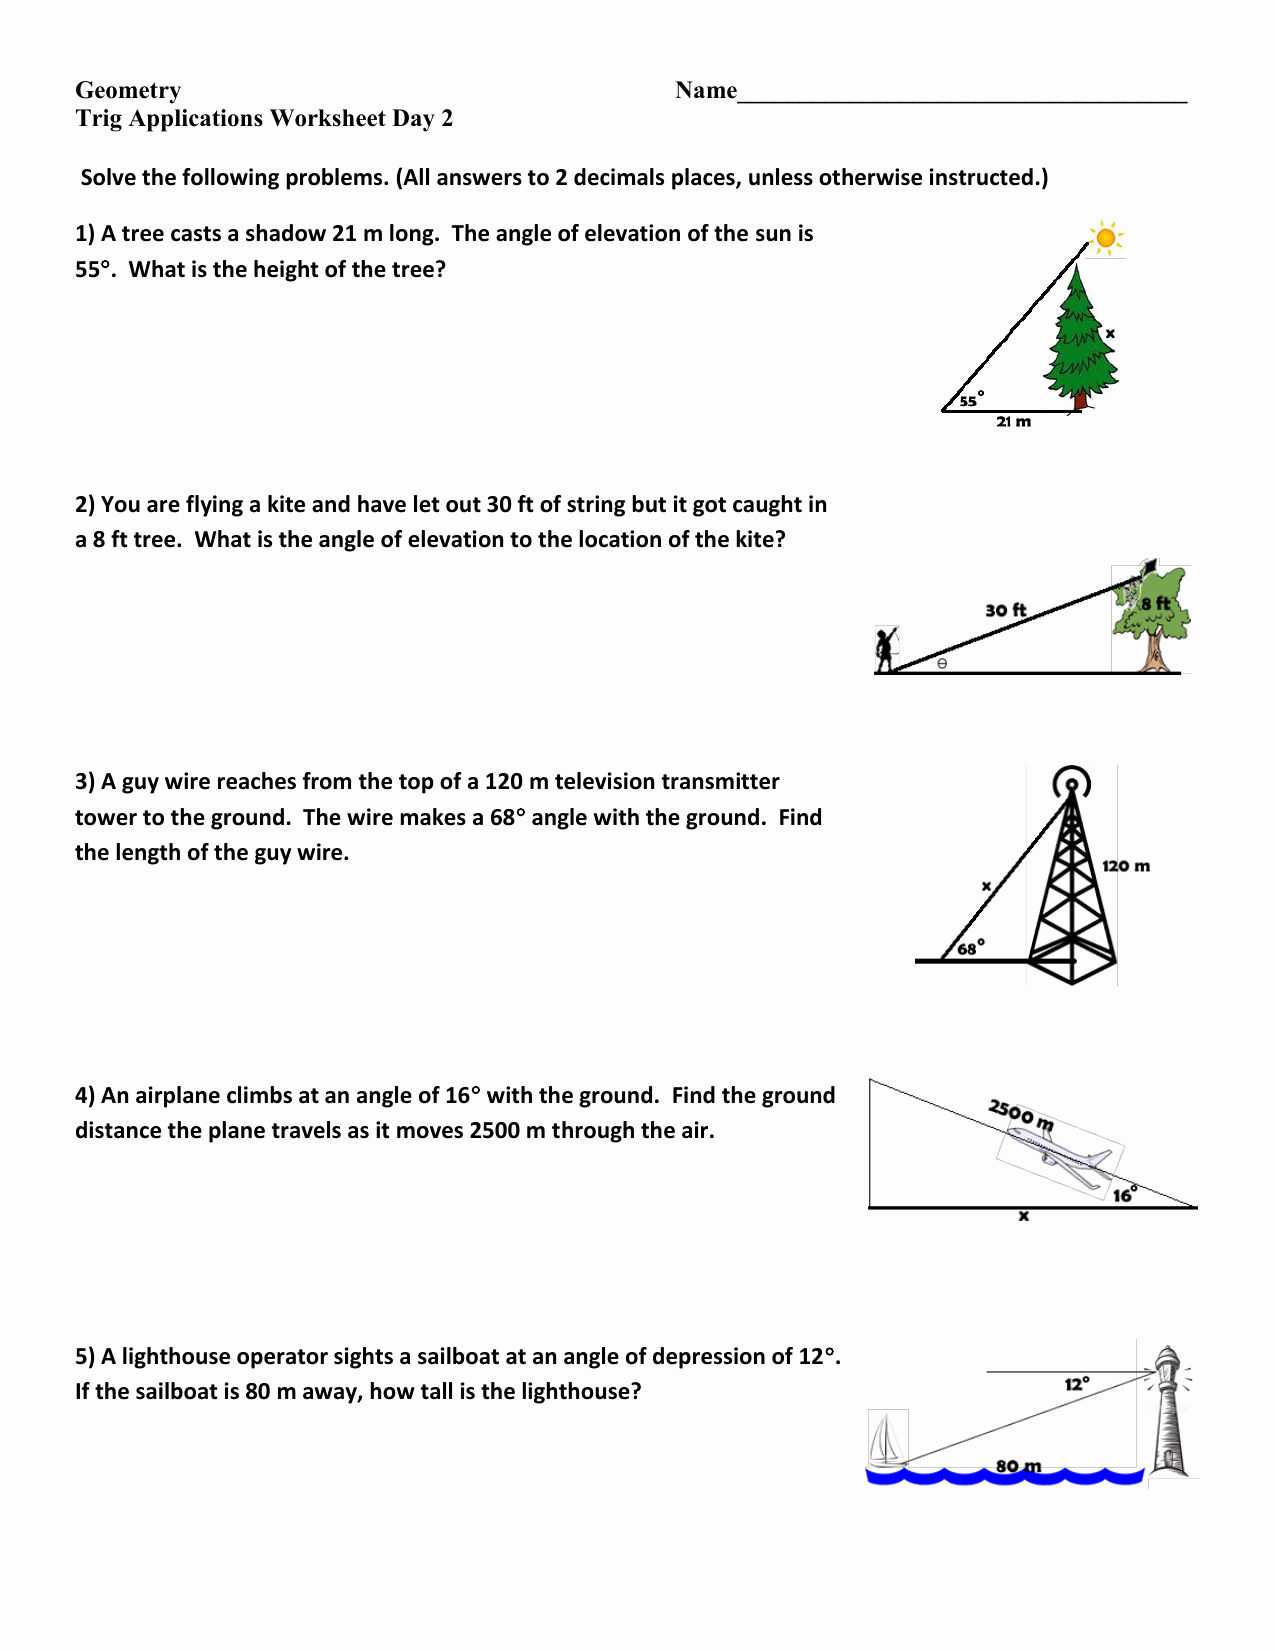 Trigonometry Word Problems Worksheet Awesome Trigonometry Triangles Mechanical Electrical Wiringelc